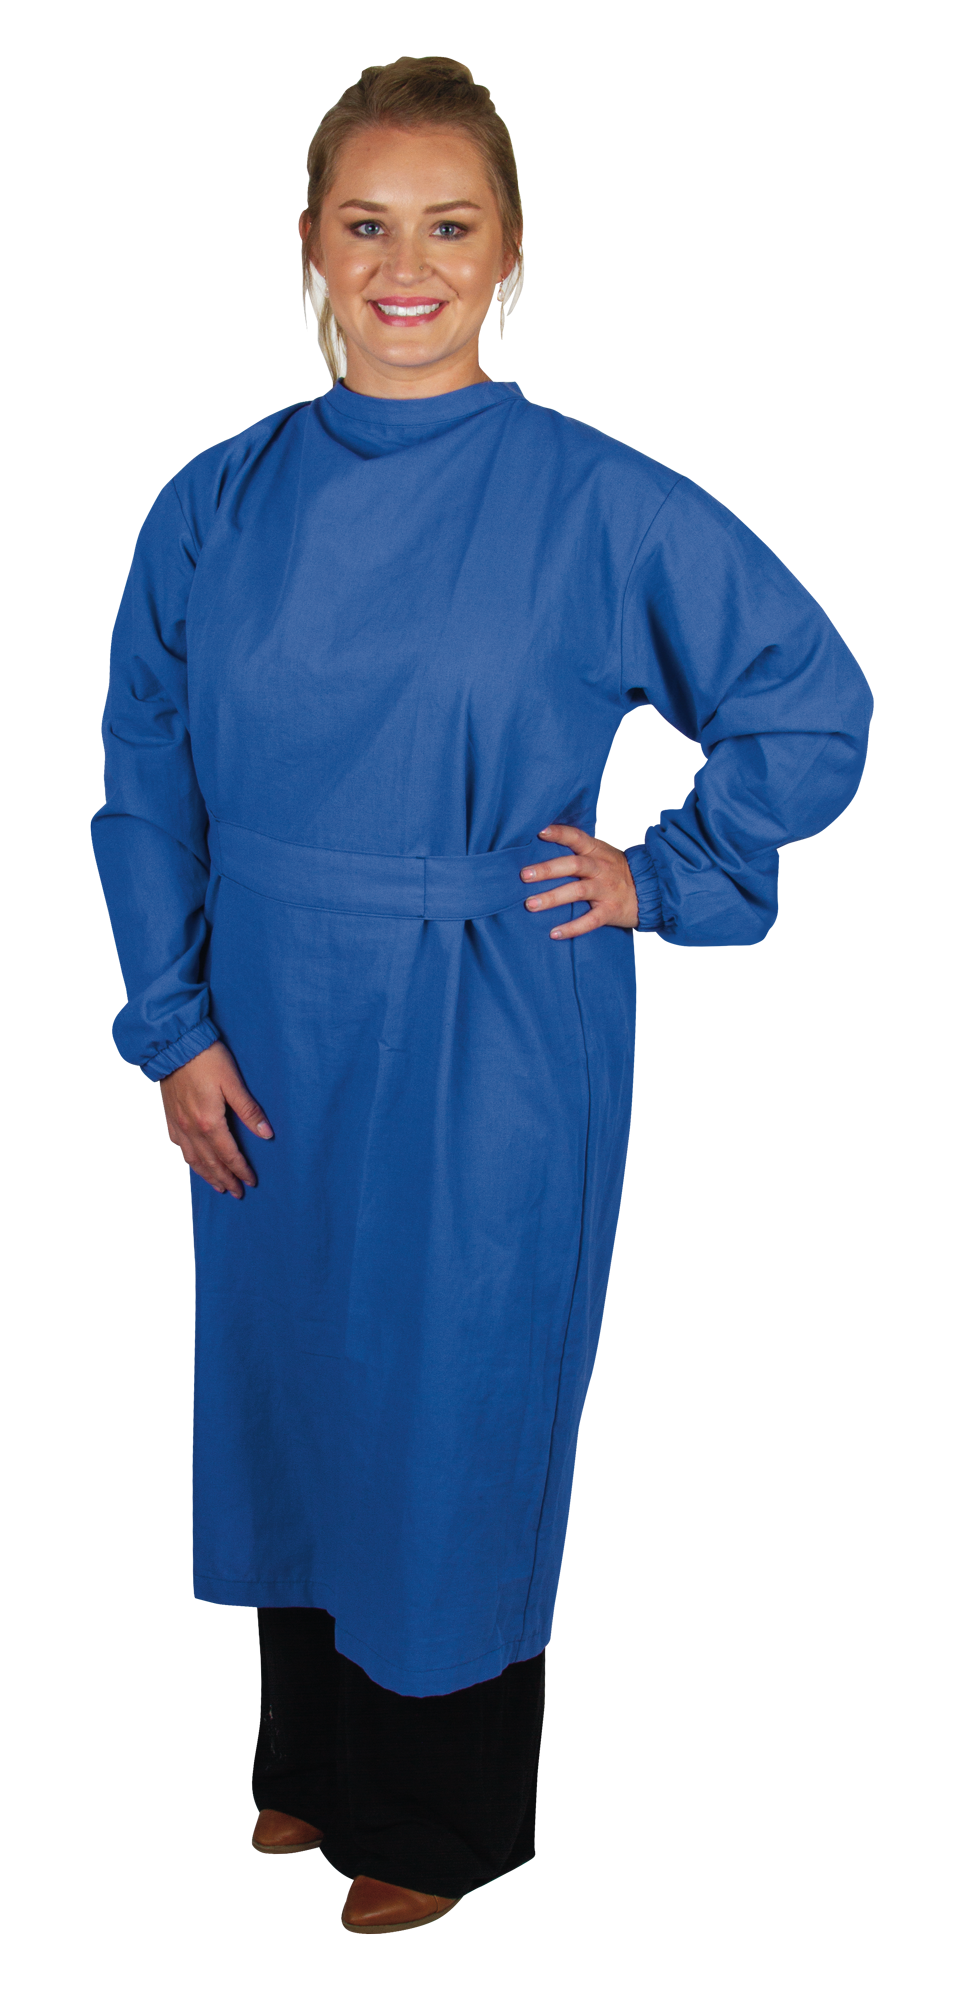 Cloth Reusable Surgeon Surgical Gown, 100% Cotton, 2X-Large | eBay